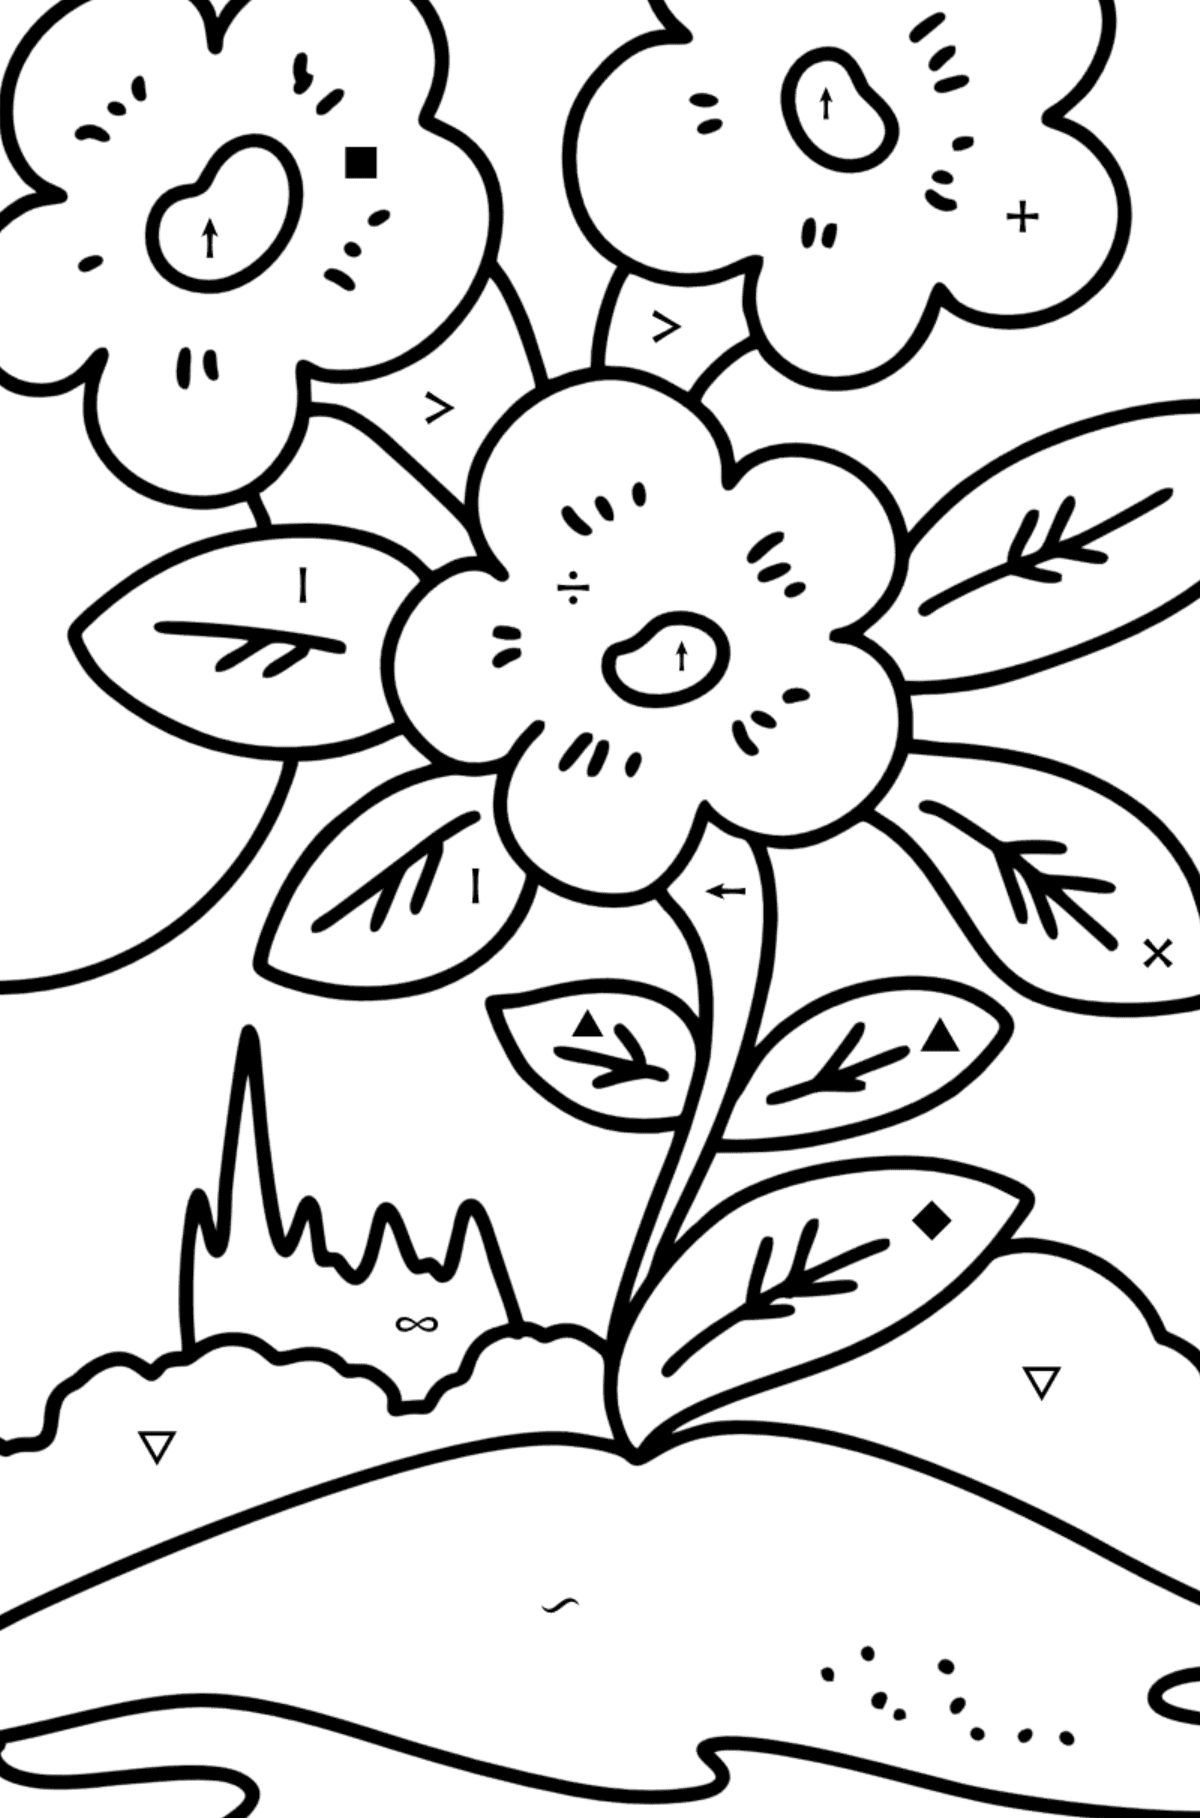 Mewarnai gambar bunga musim semi yang lucu - Pewarnaan mengikuti Simbol untuk anak-anak